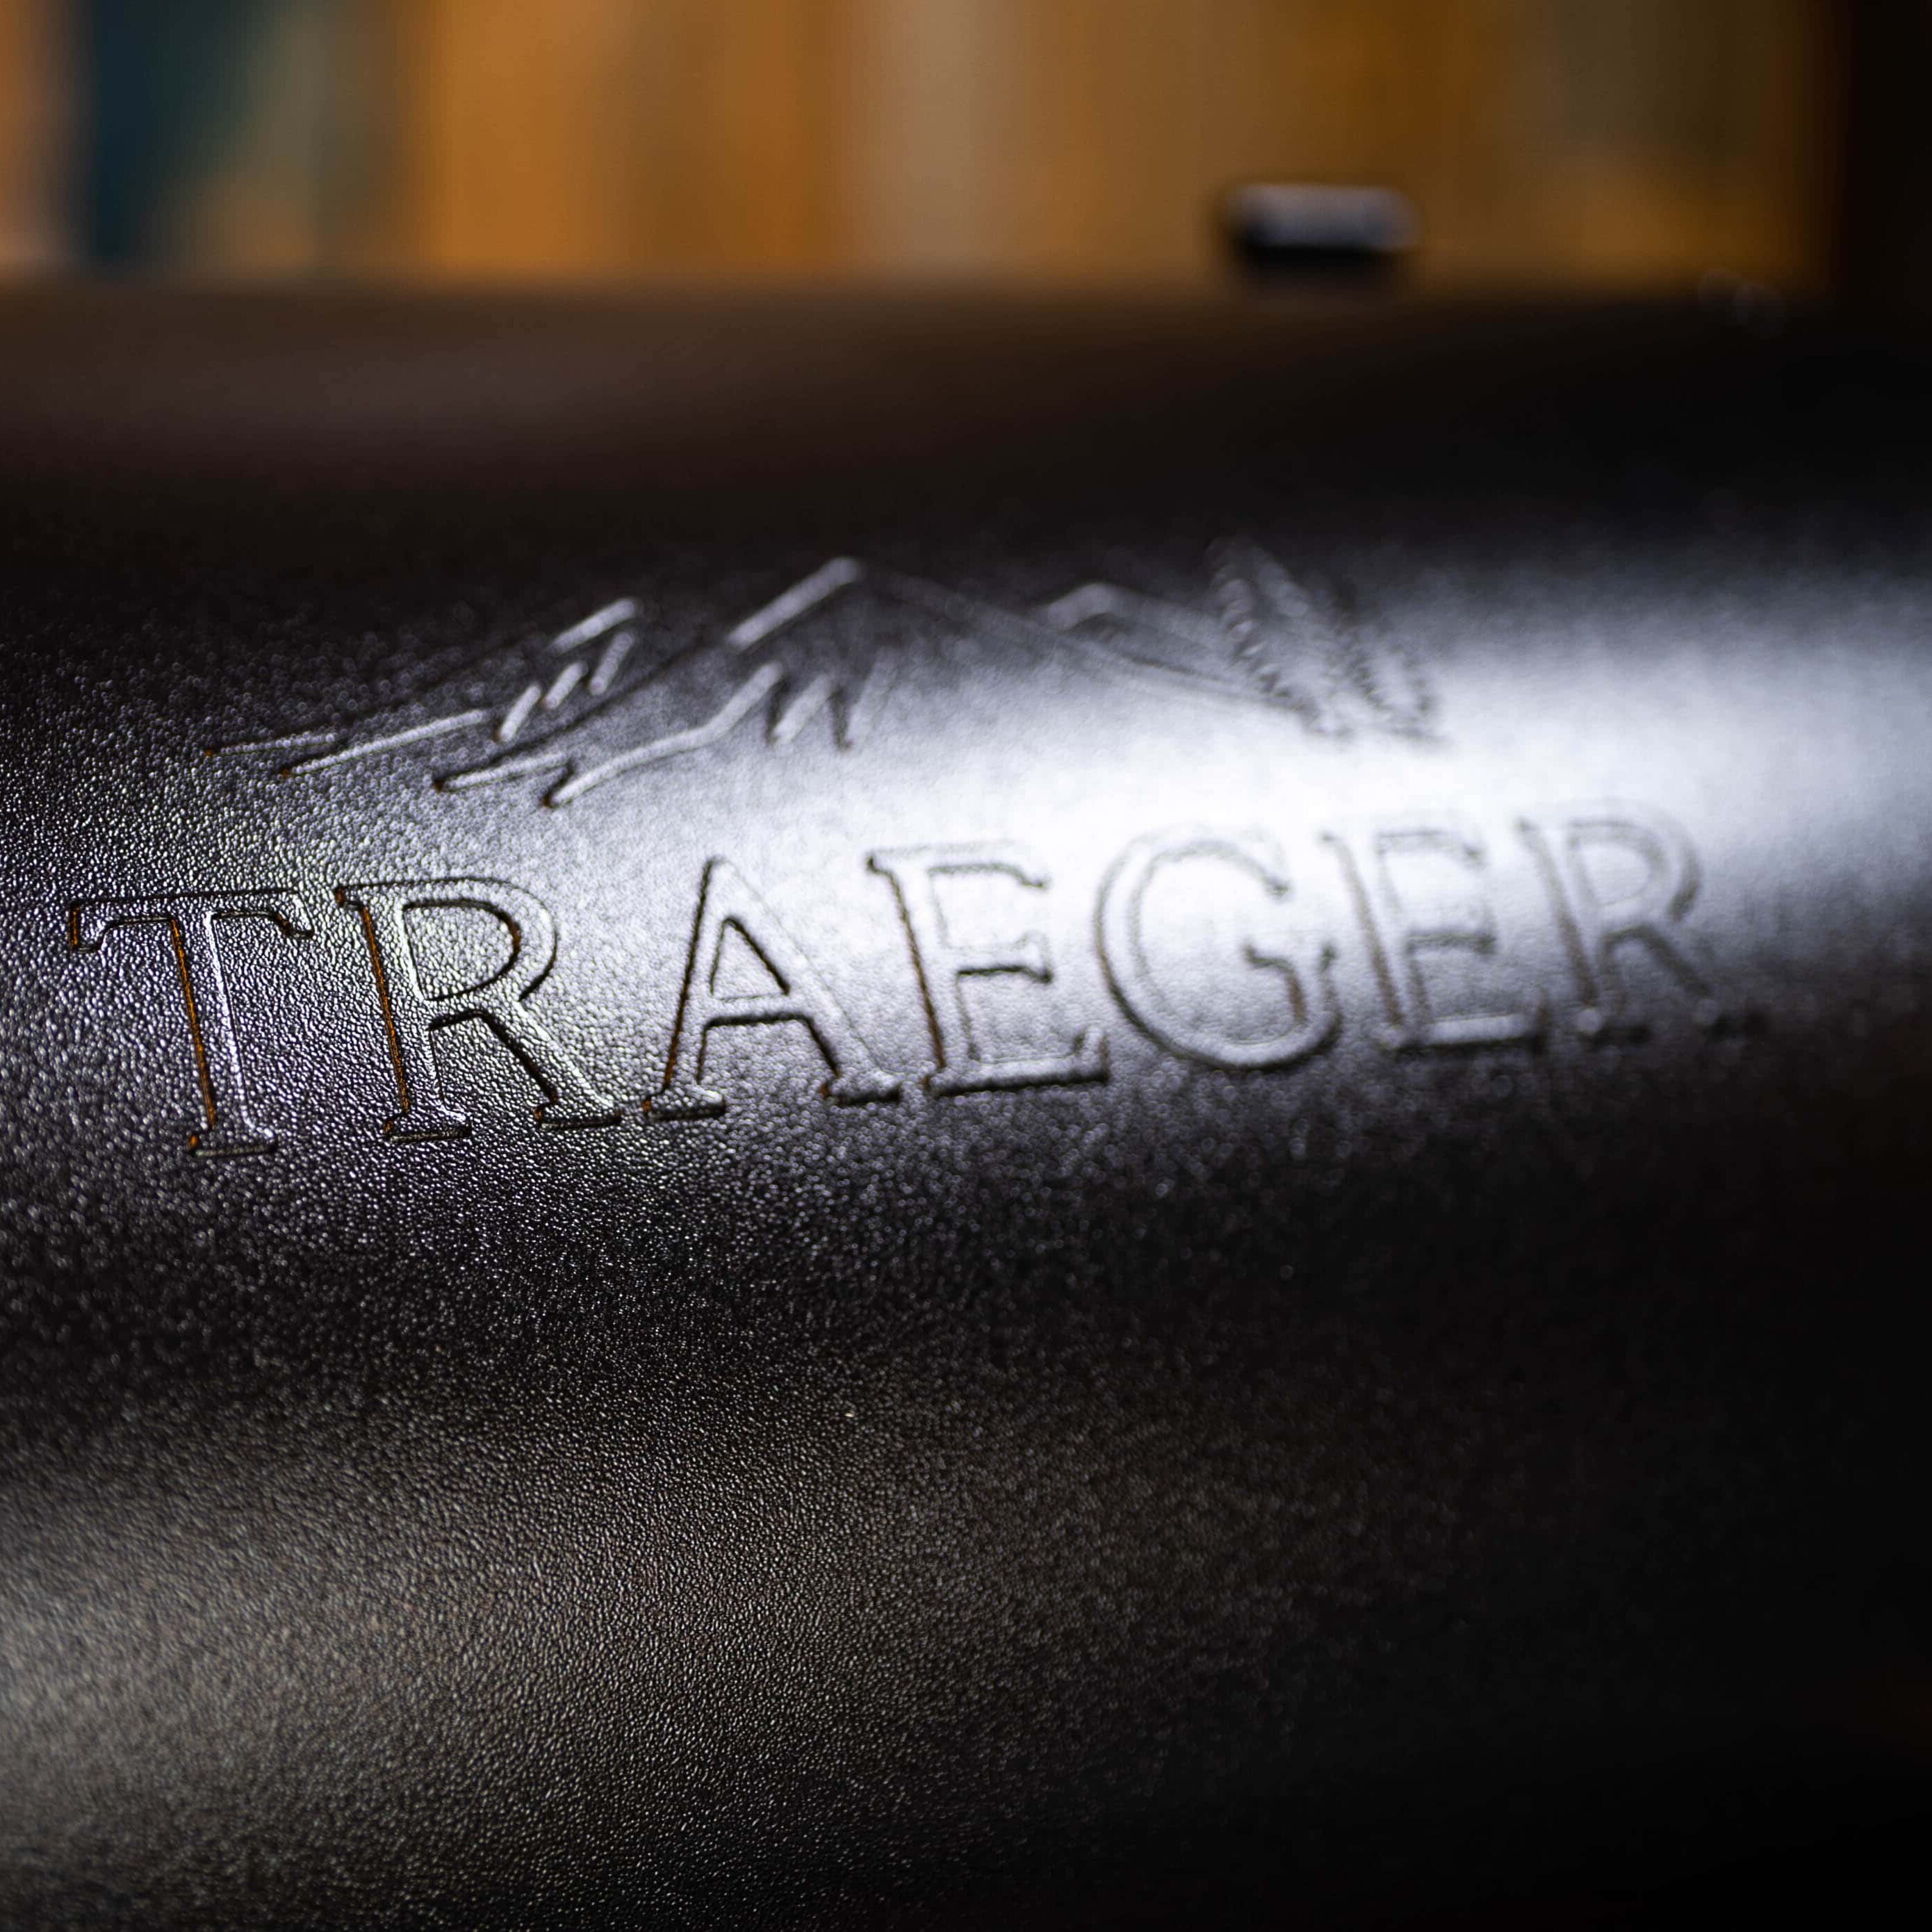 Traeger Pro 780